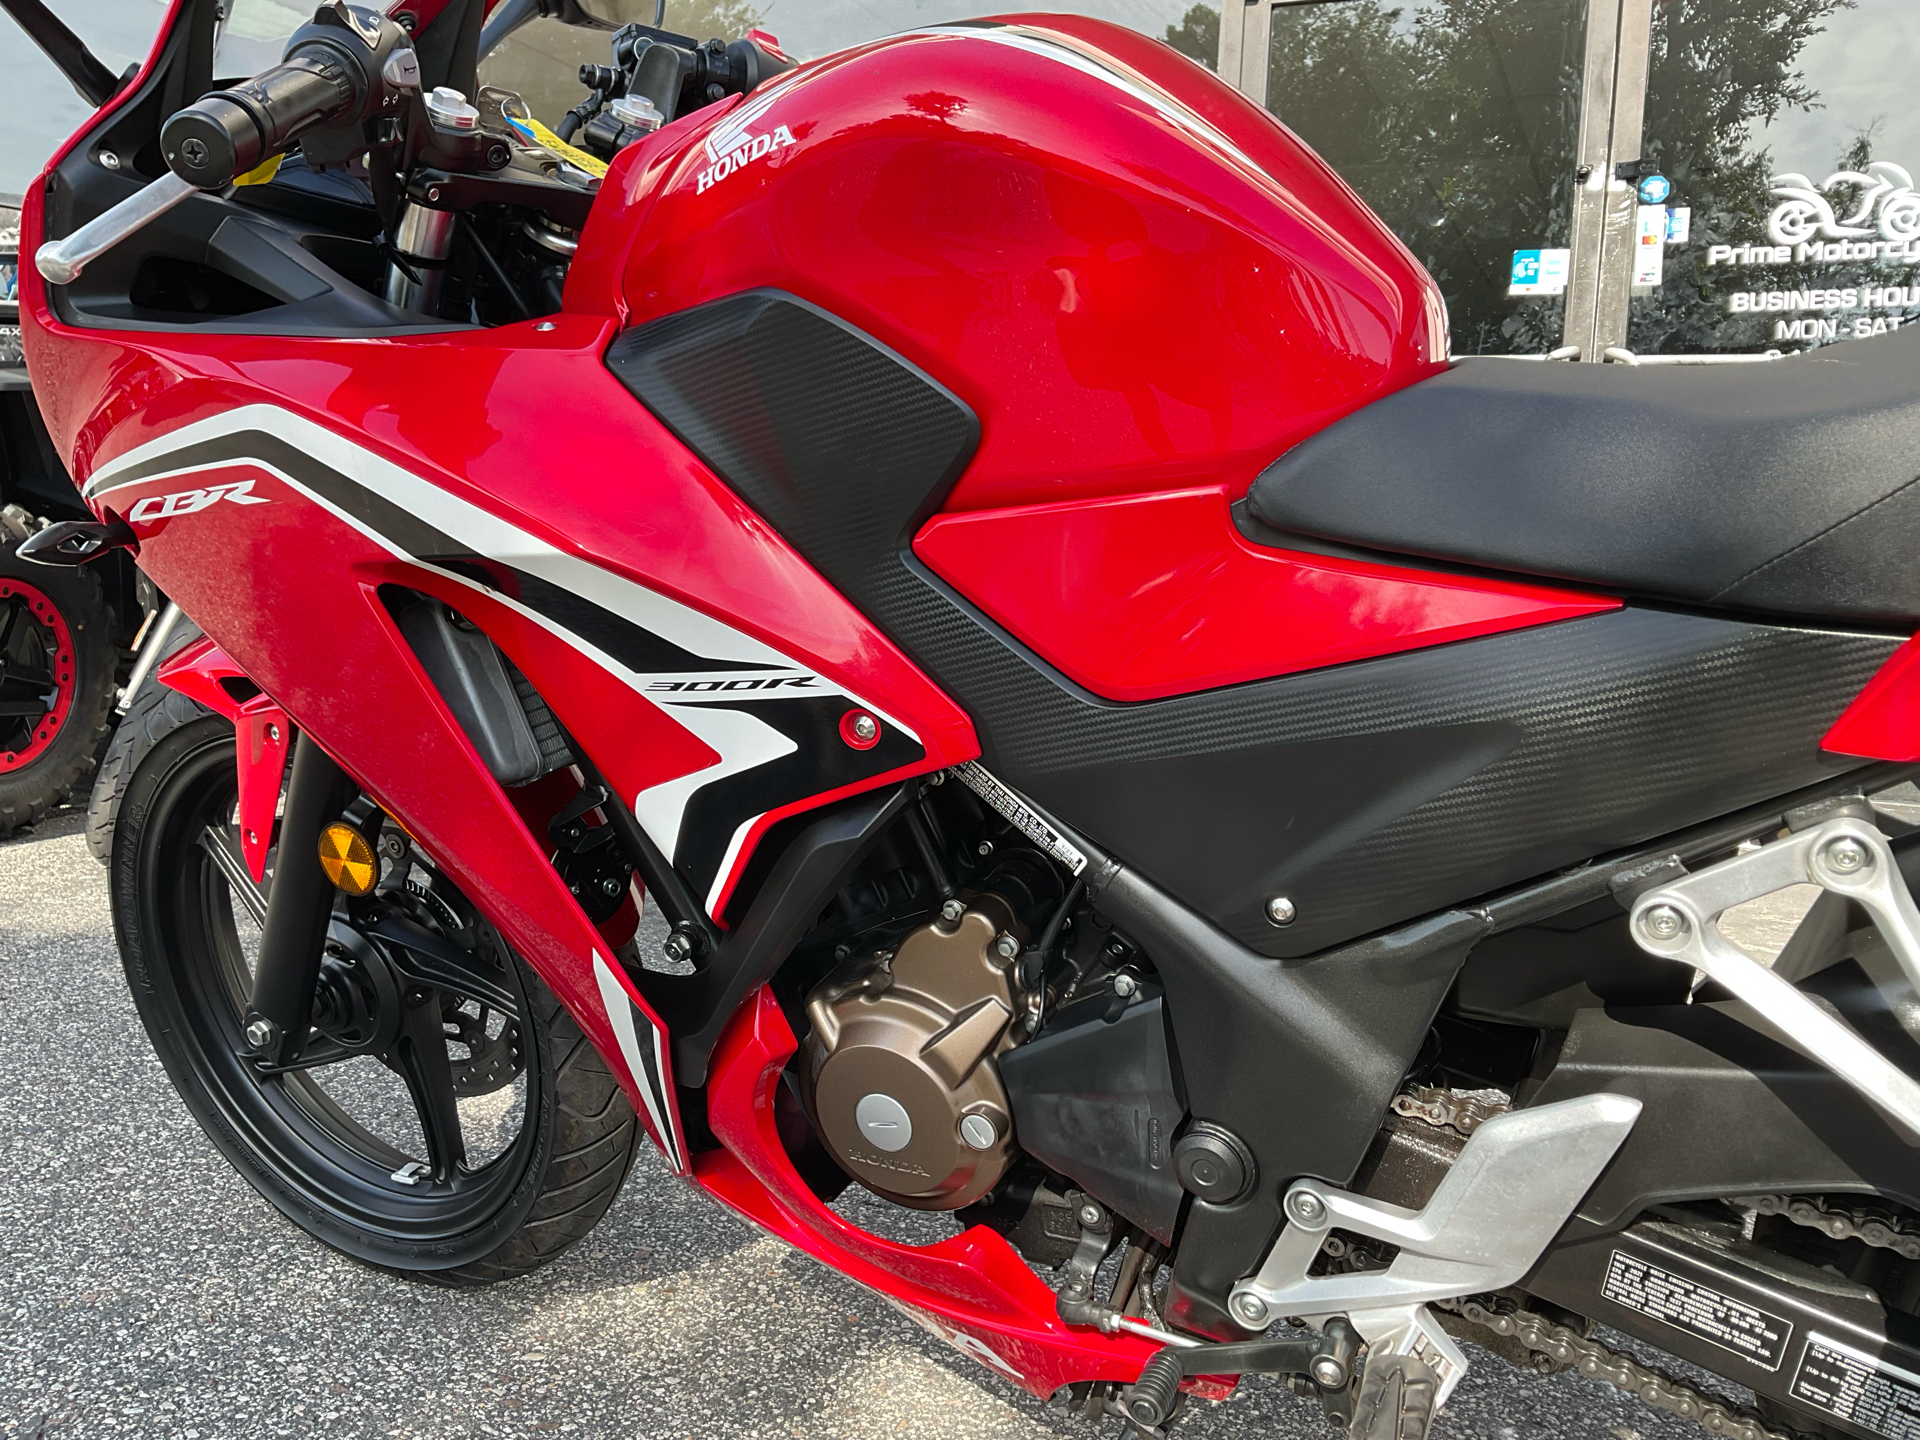 2021 Honda CBR300R ABS in Sanford, Florida - Photo 12